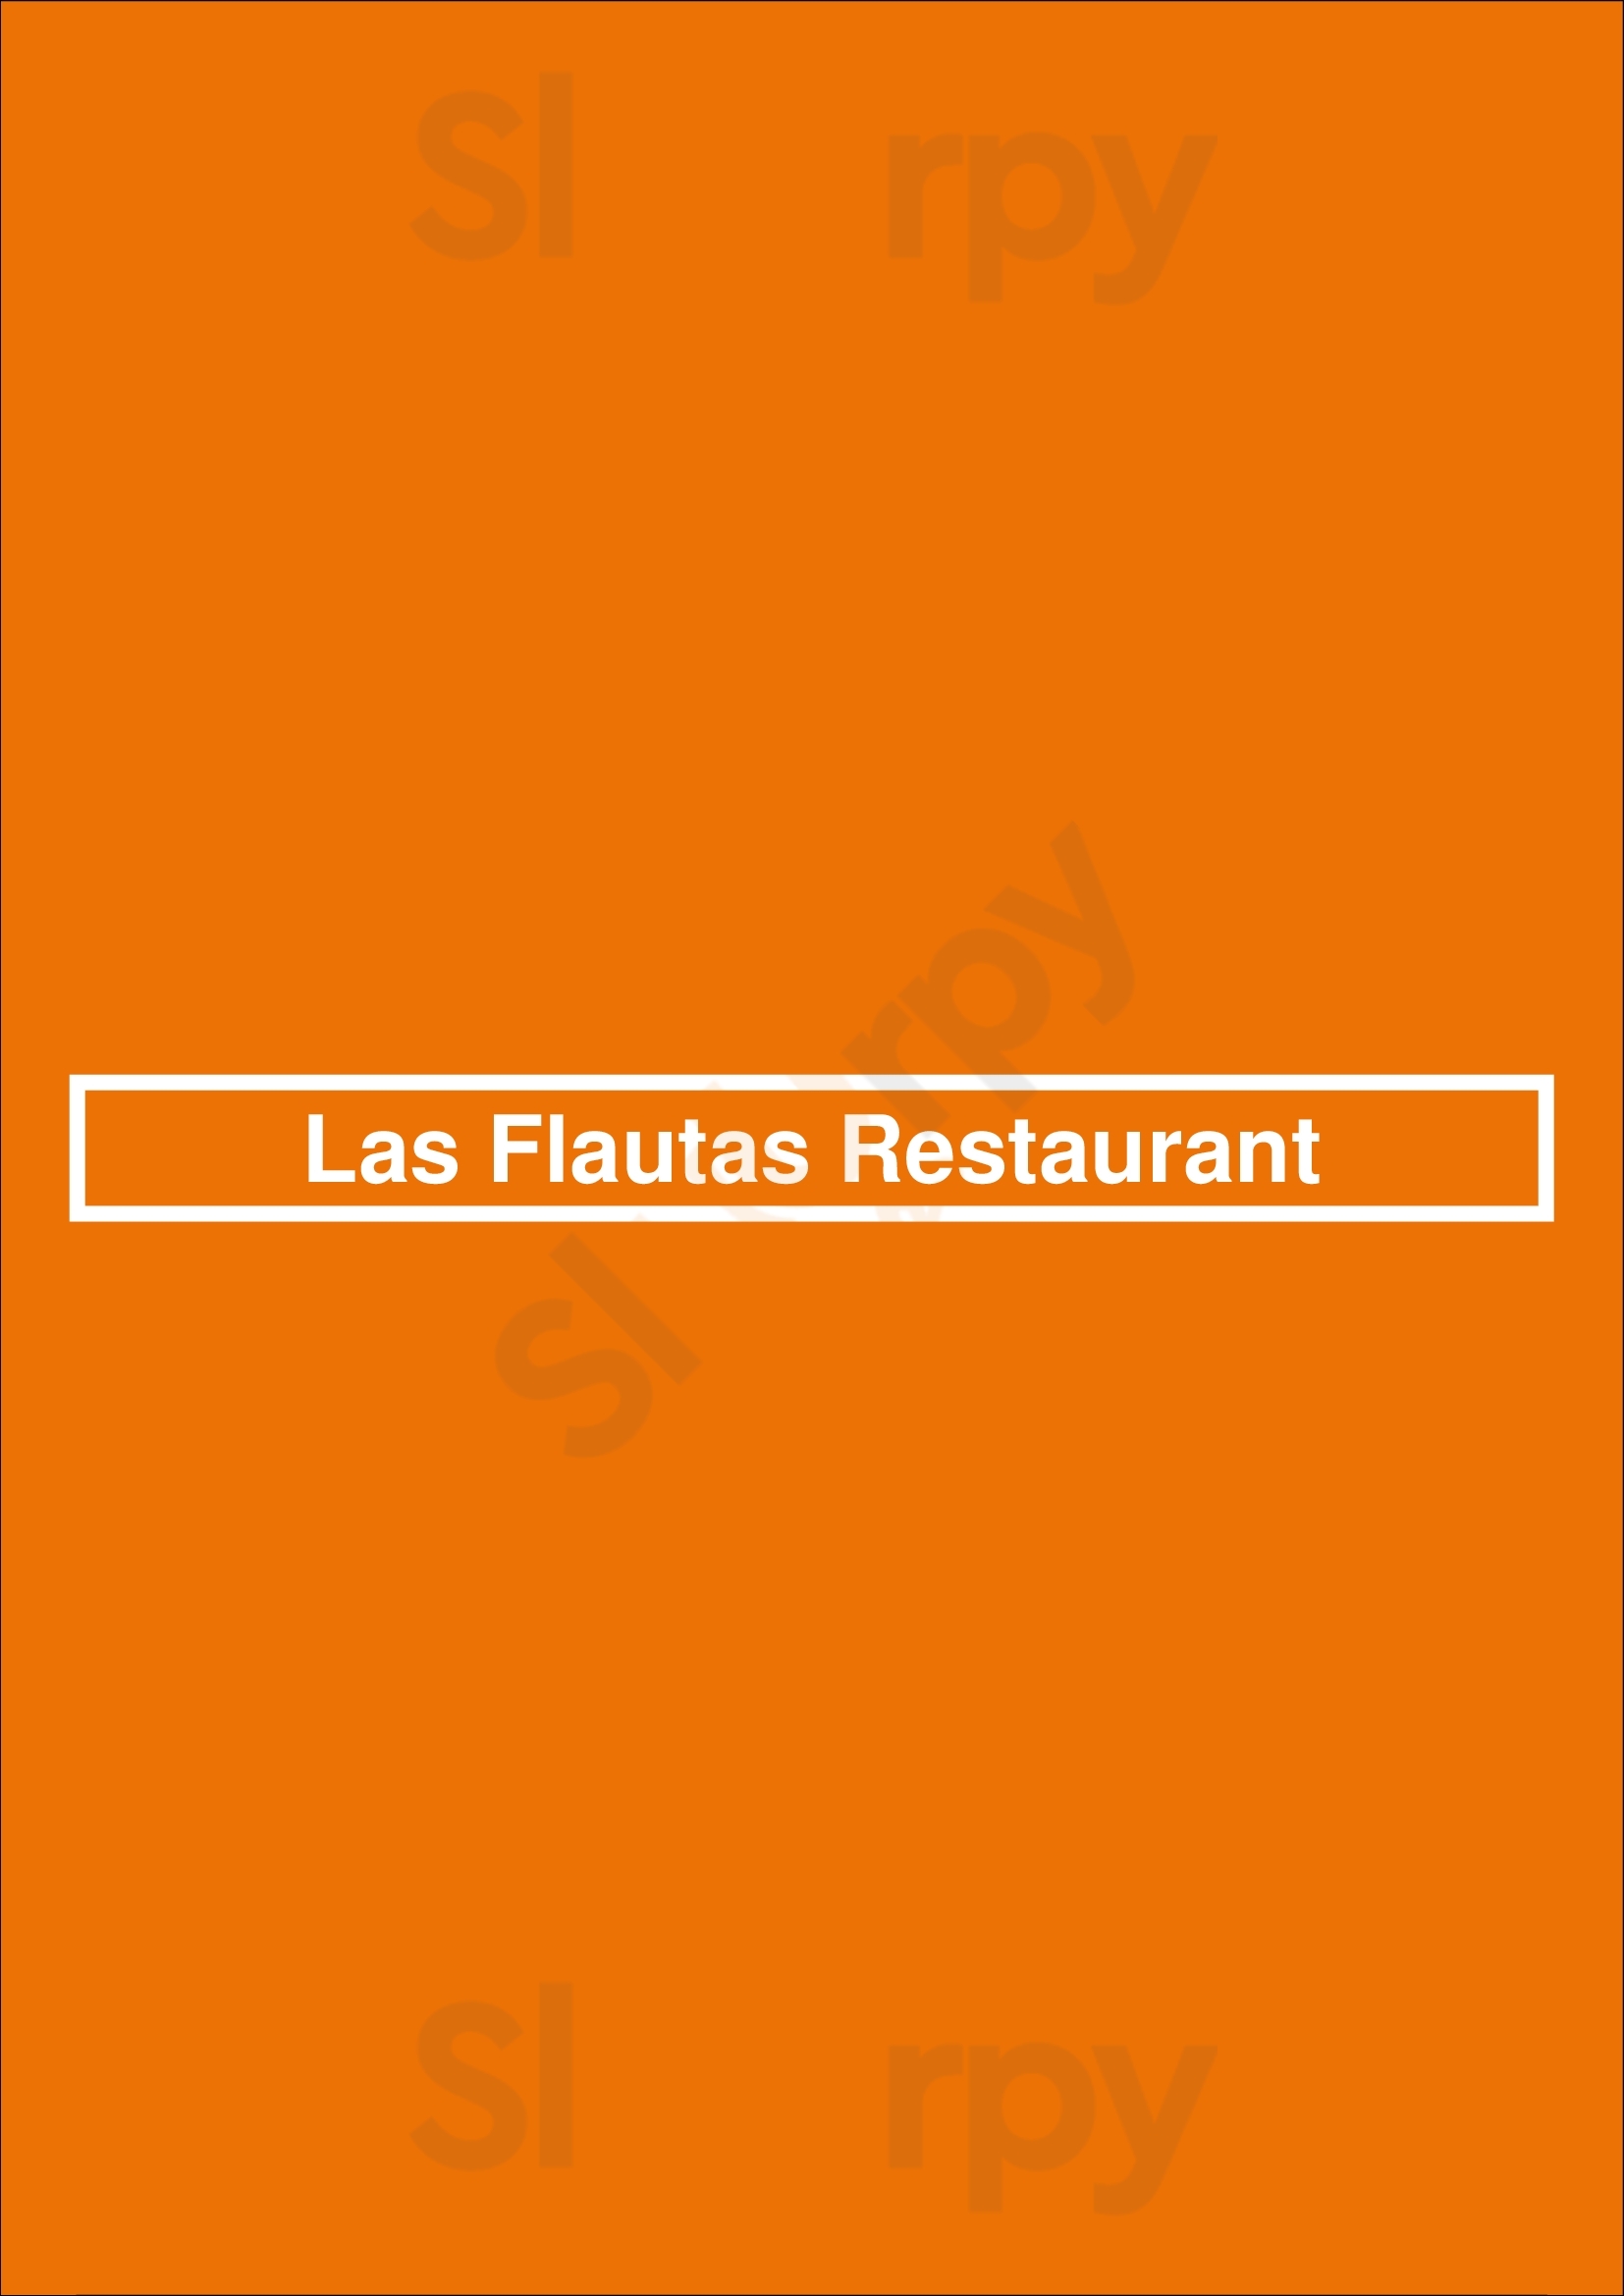 Las Flautas Restaurant Los Angeles Menu - 1